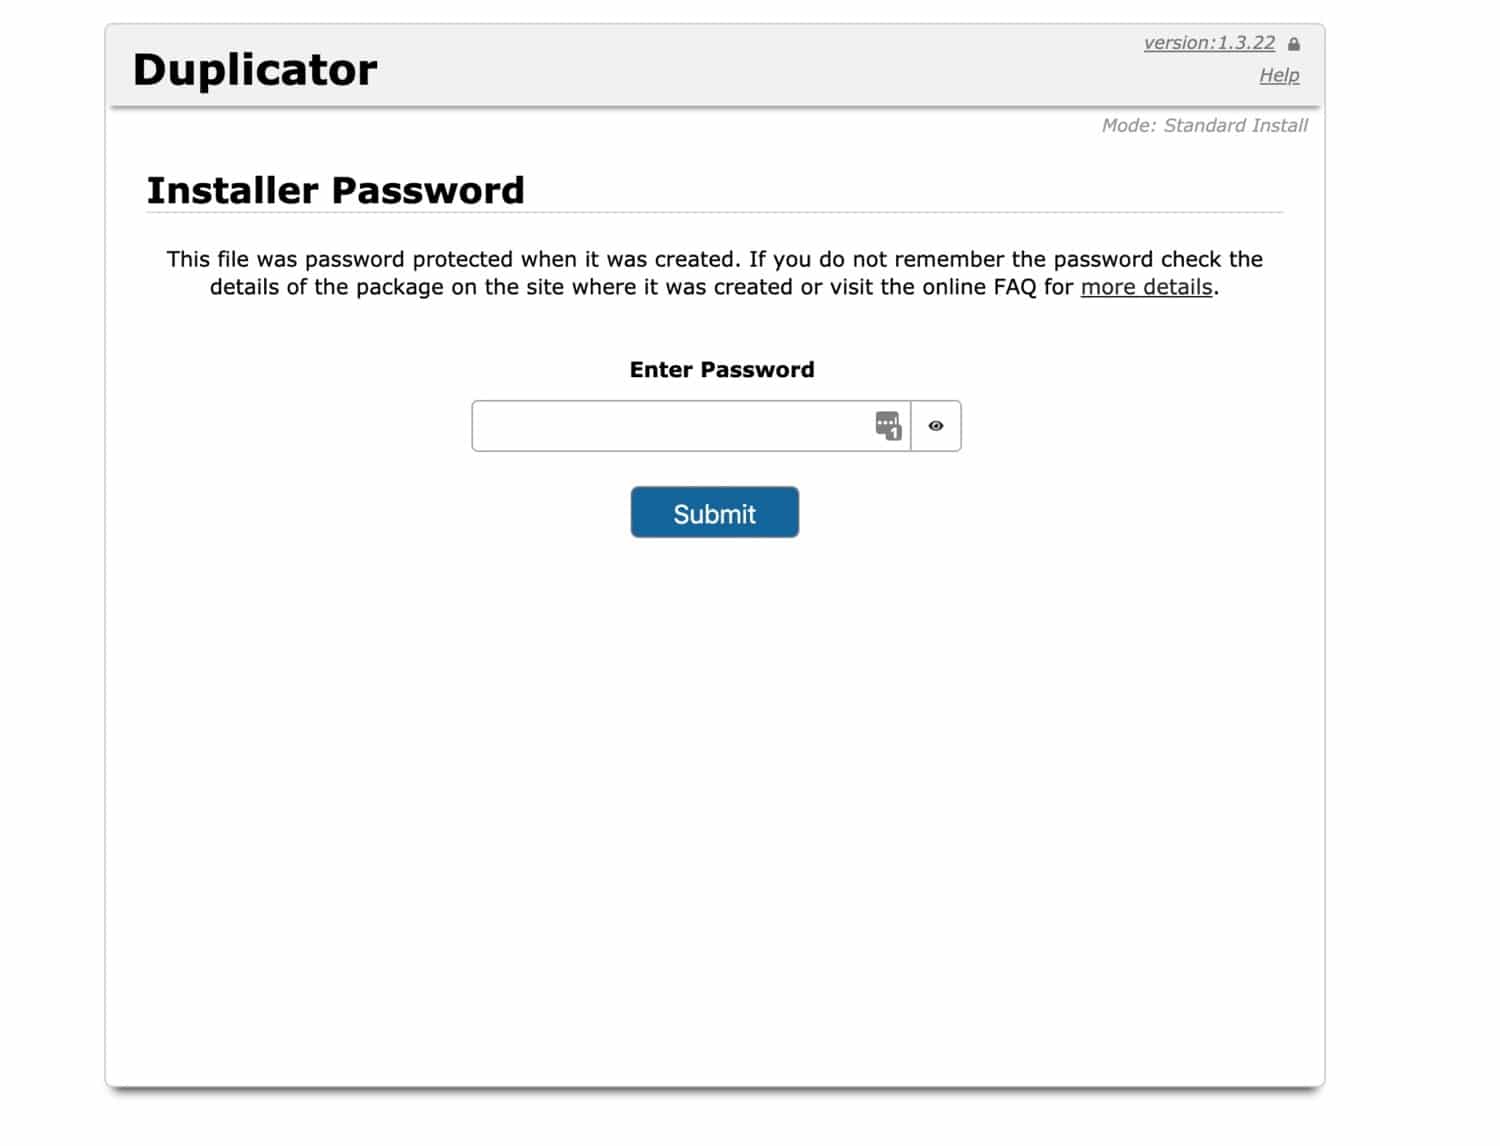 Duplicatorのパスワード入力画面